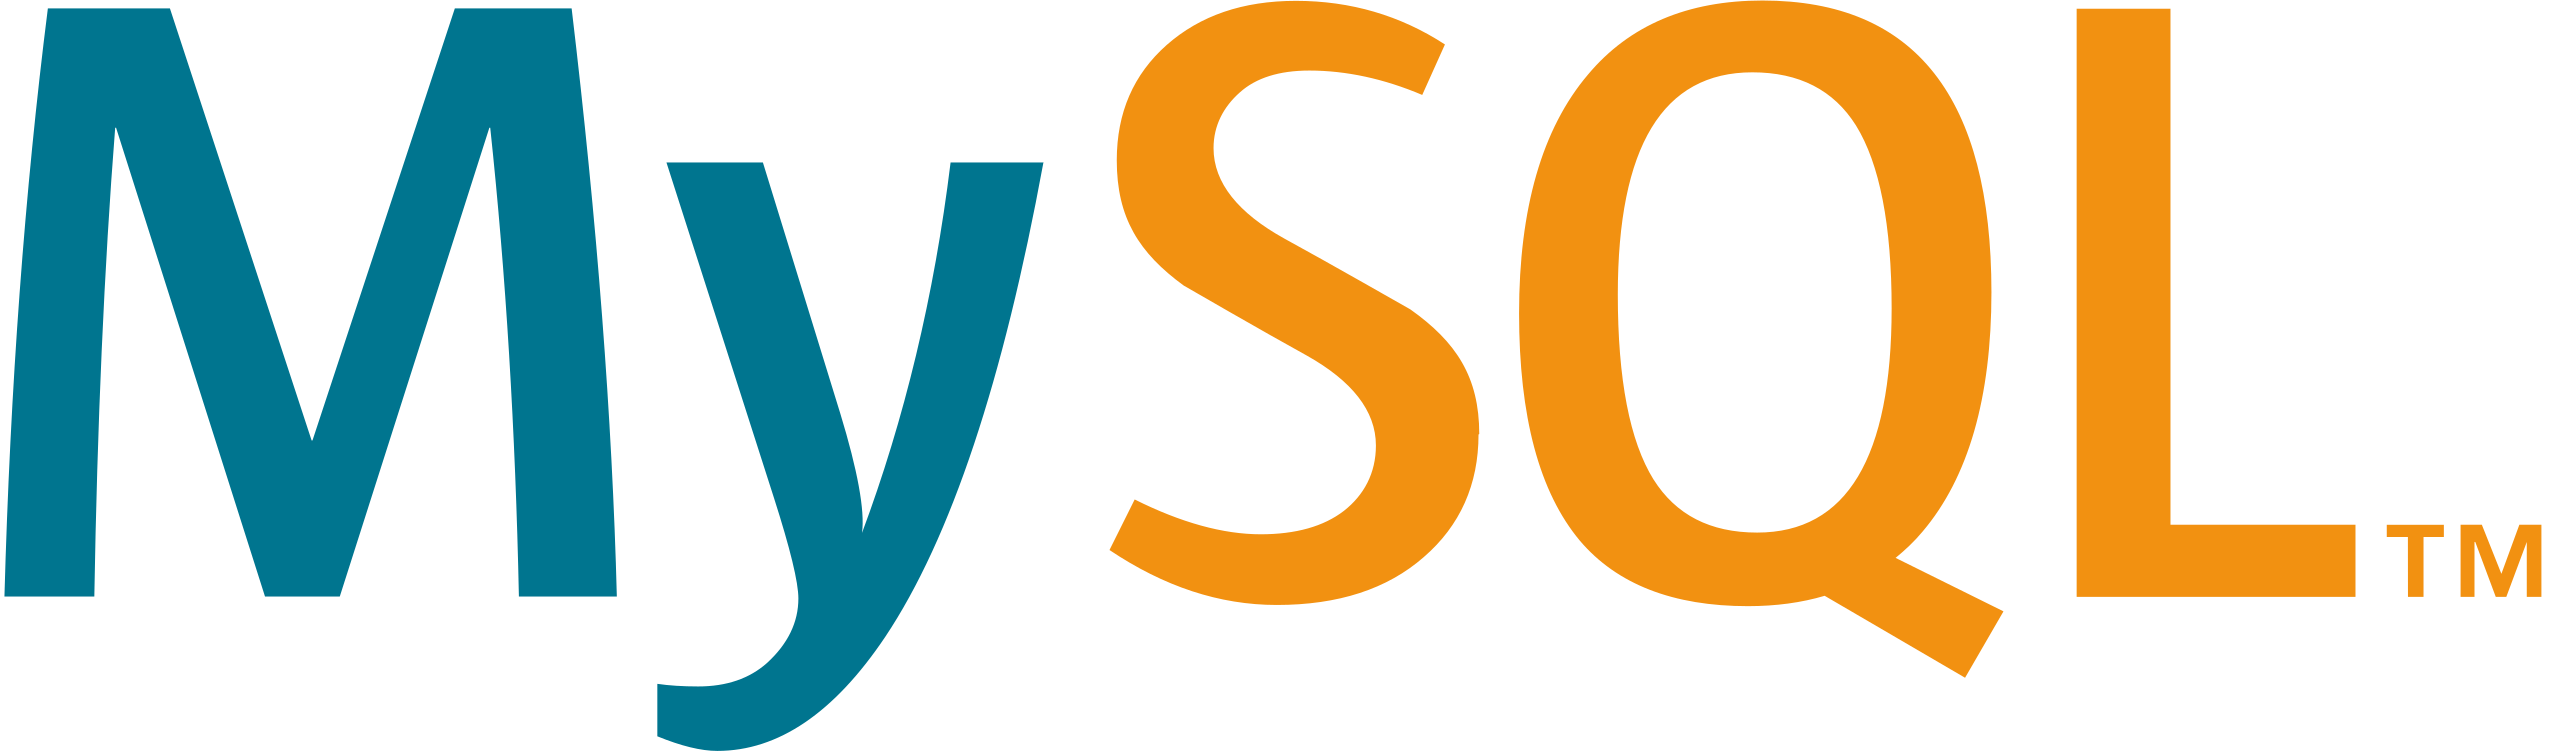 MySQL | Cloud Host World